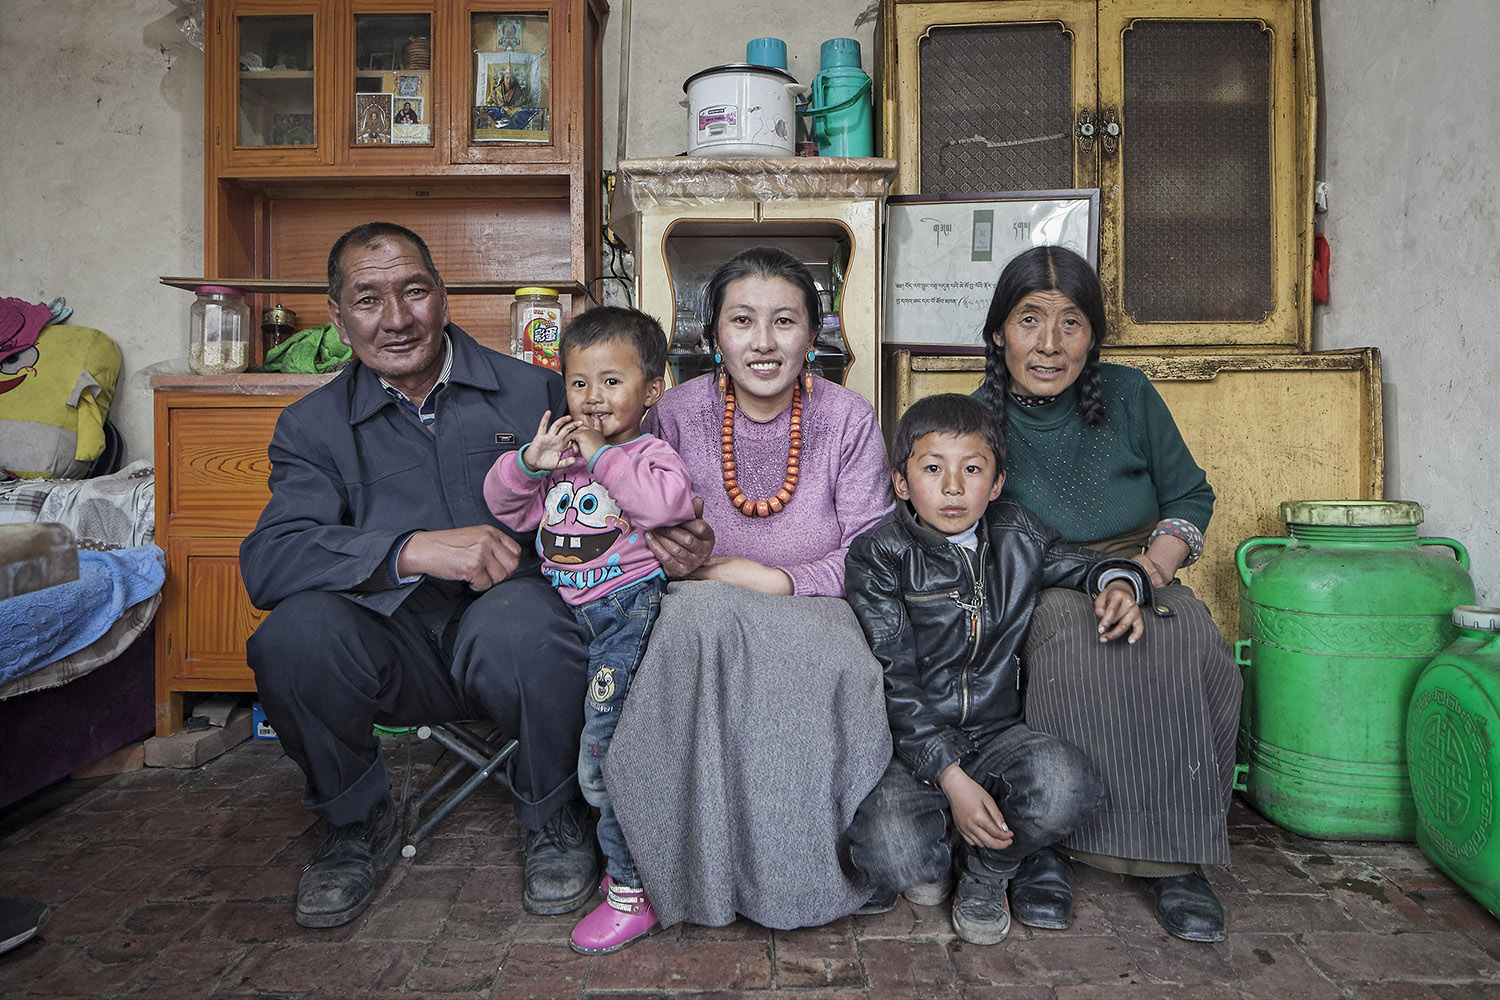  Norlha employee family portraits - for Norlha Textiles in Amdo on the Tibetan Plateau 